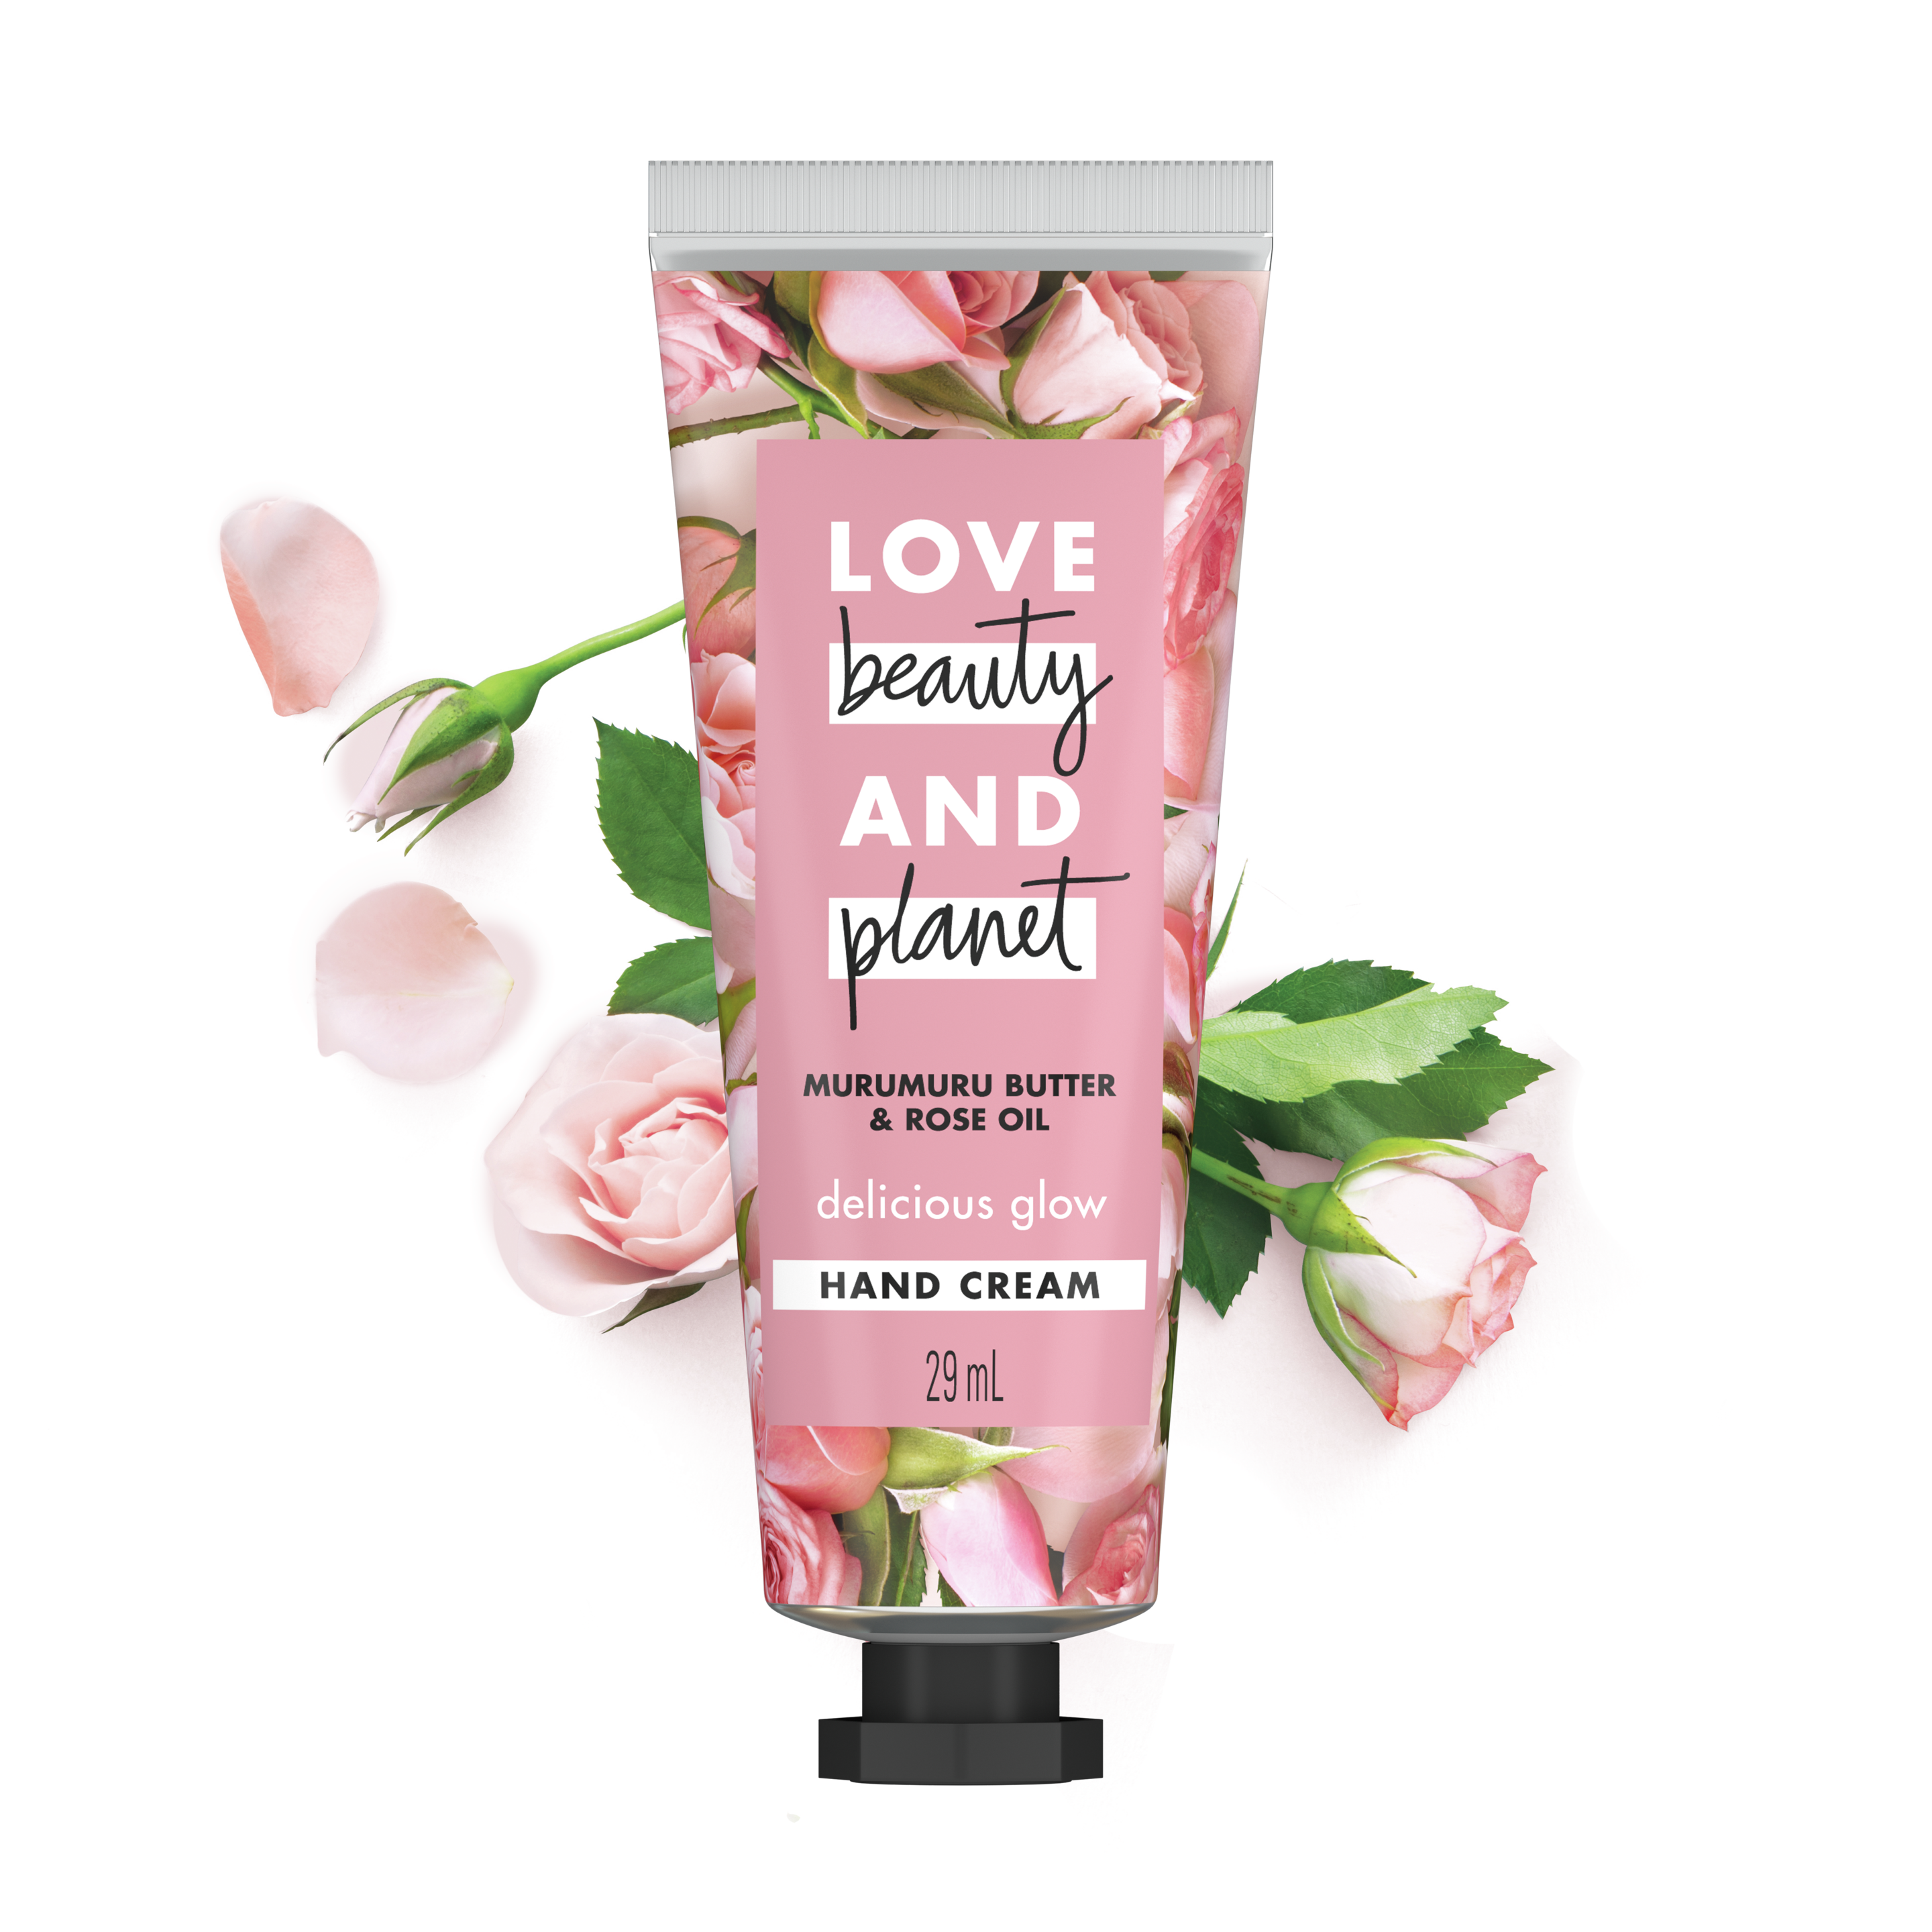 Tampak depan kemasan Love Beauty and Planet Delicious Glow Hand Cream ukuran 29 ml Text